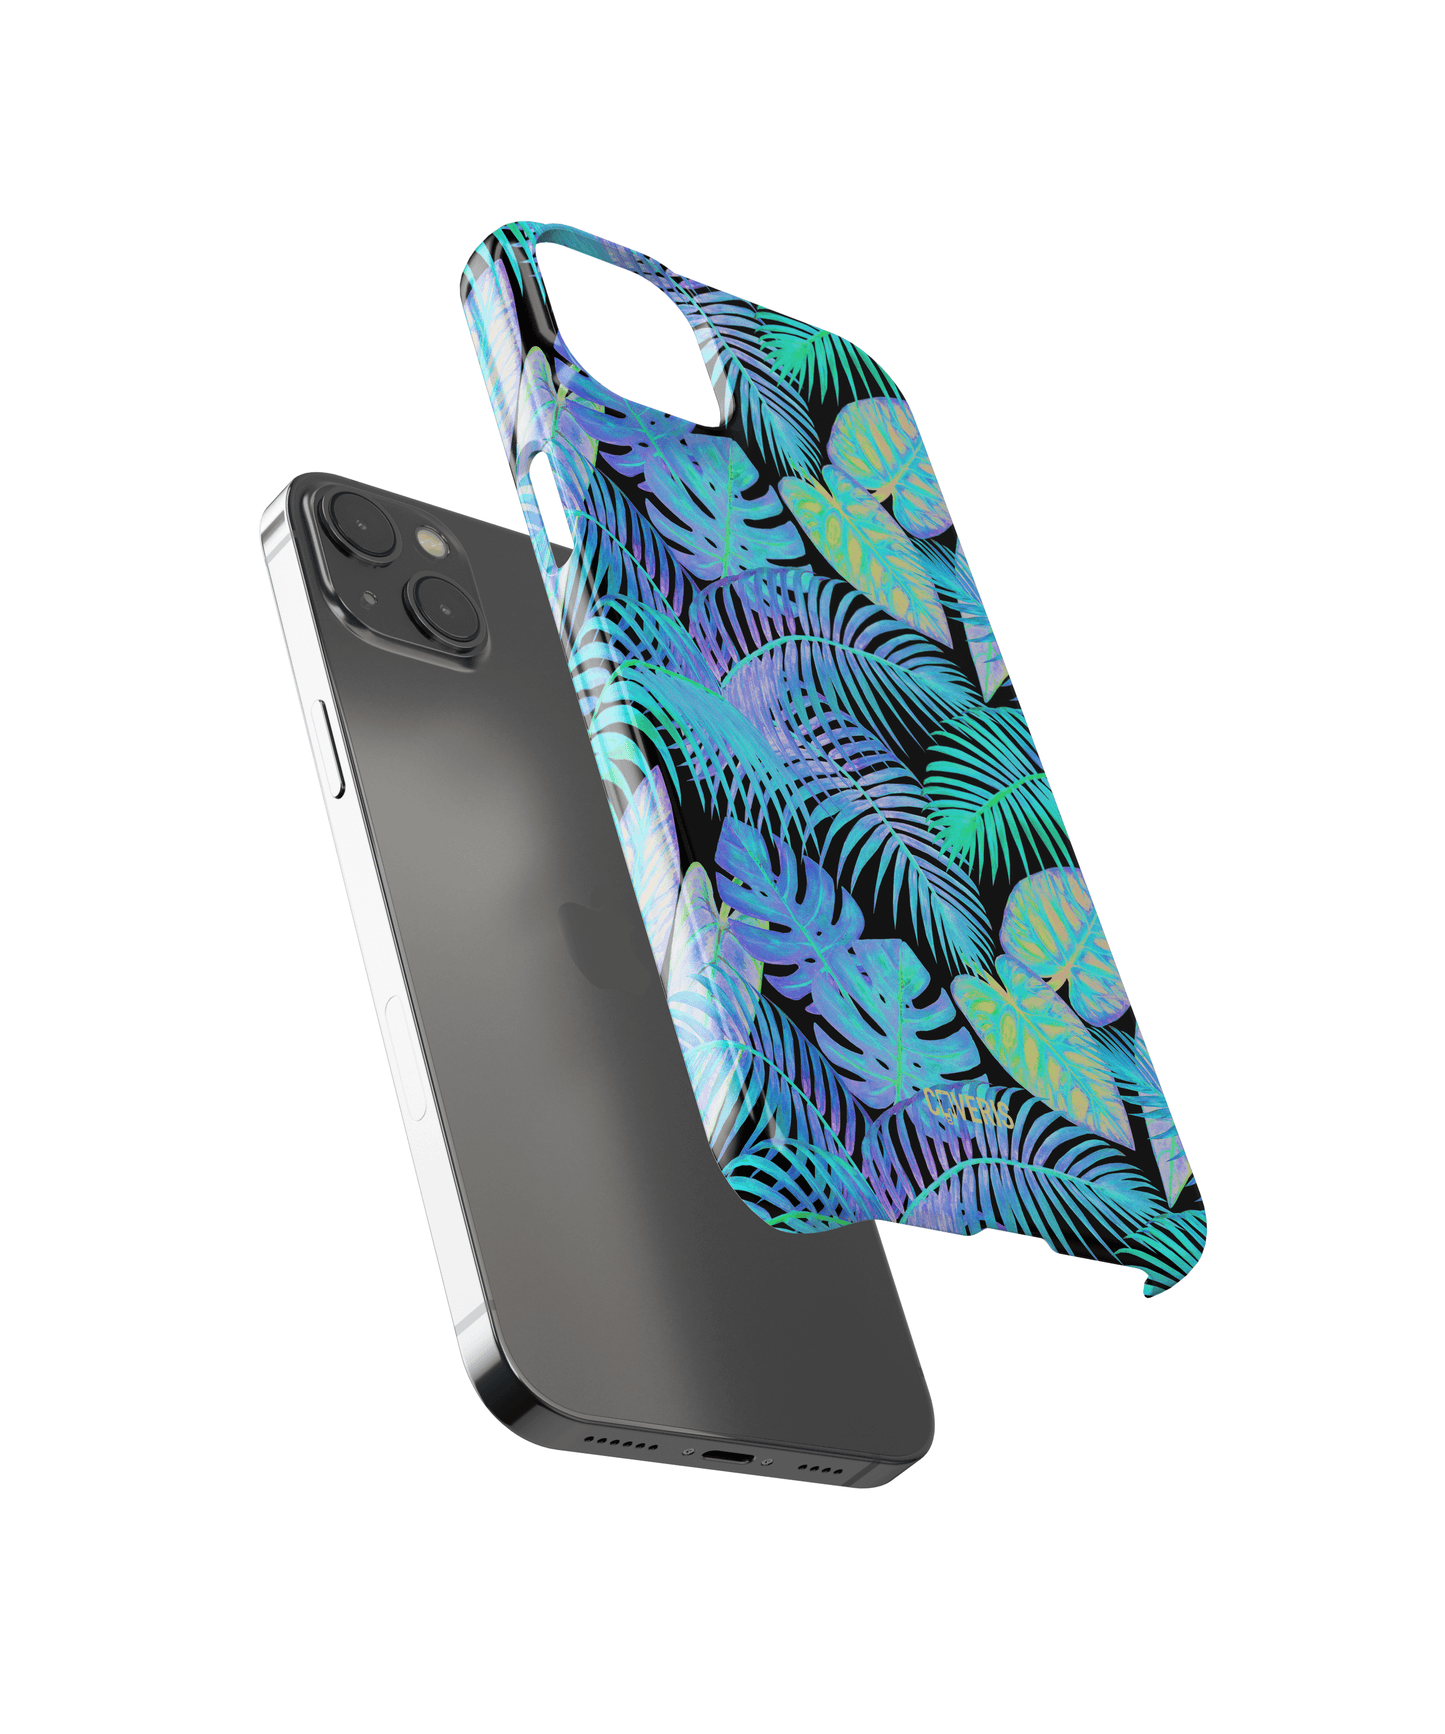 Tropic - Google Pixel 4 XL phone case